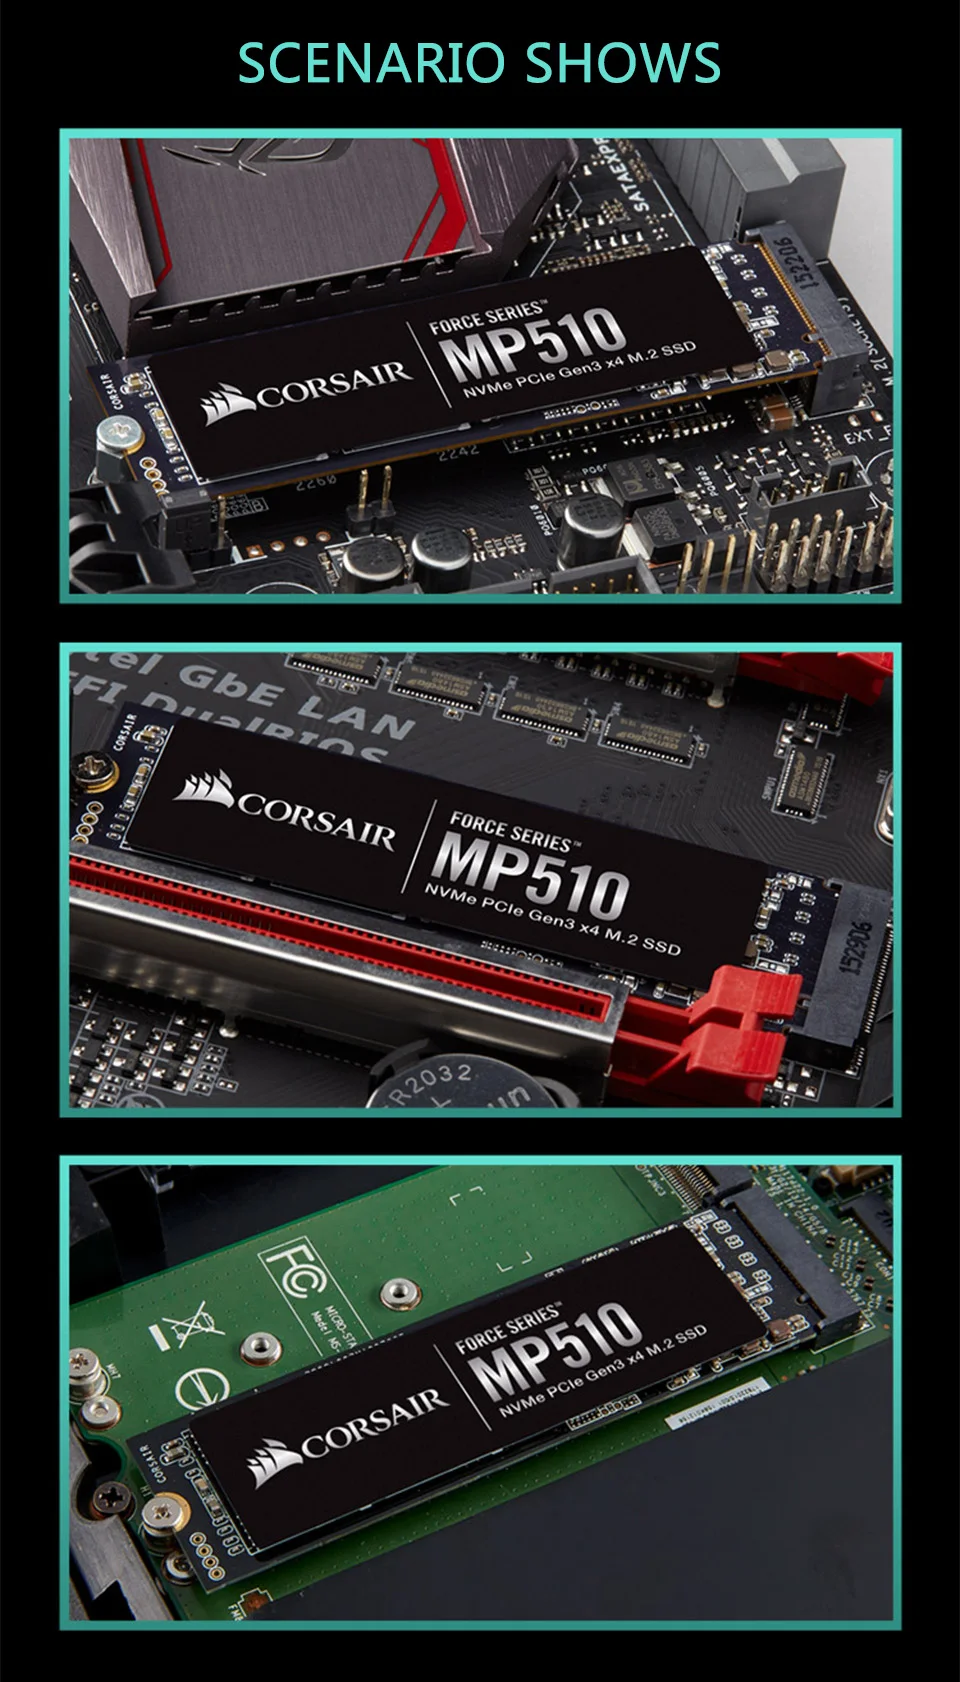 Ноутбук CORSAIR FORCE Series MP510 SSD 240 ГБ NVMe PCIe Gen3 x4 M.2 SSD 480 ГБ 960 ГБ 1920 Гб Твердотельный накопитель 3000 МБ/с./с m.2 2280